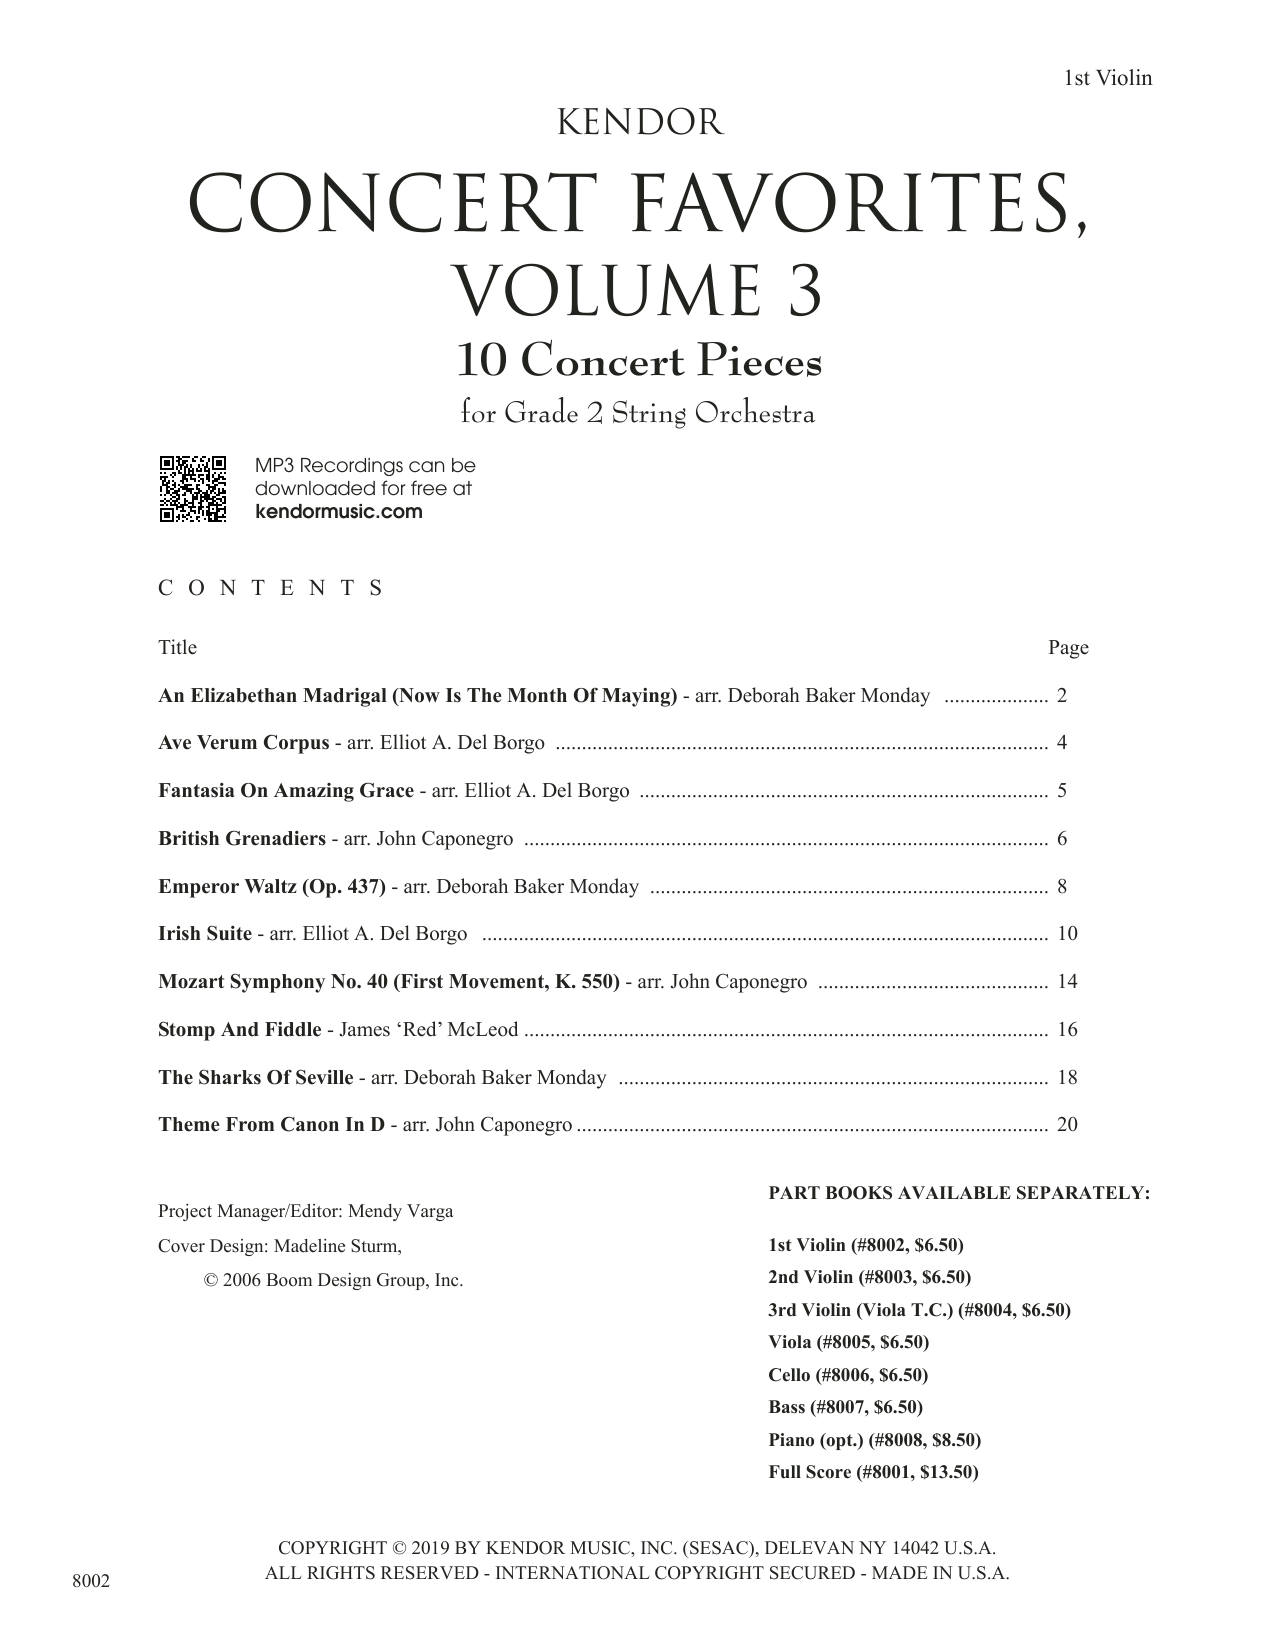 Download Various Kendor Concert Favorites, Volume 3 - 1s Sheet Music